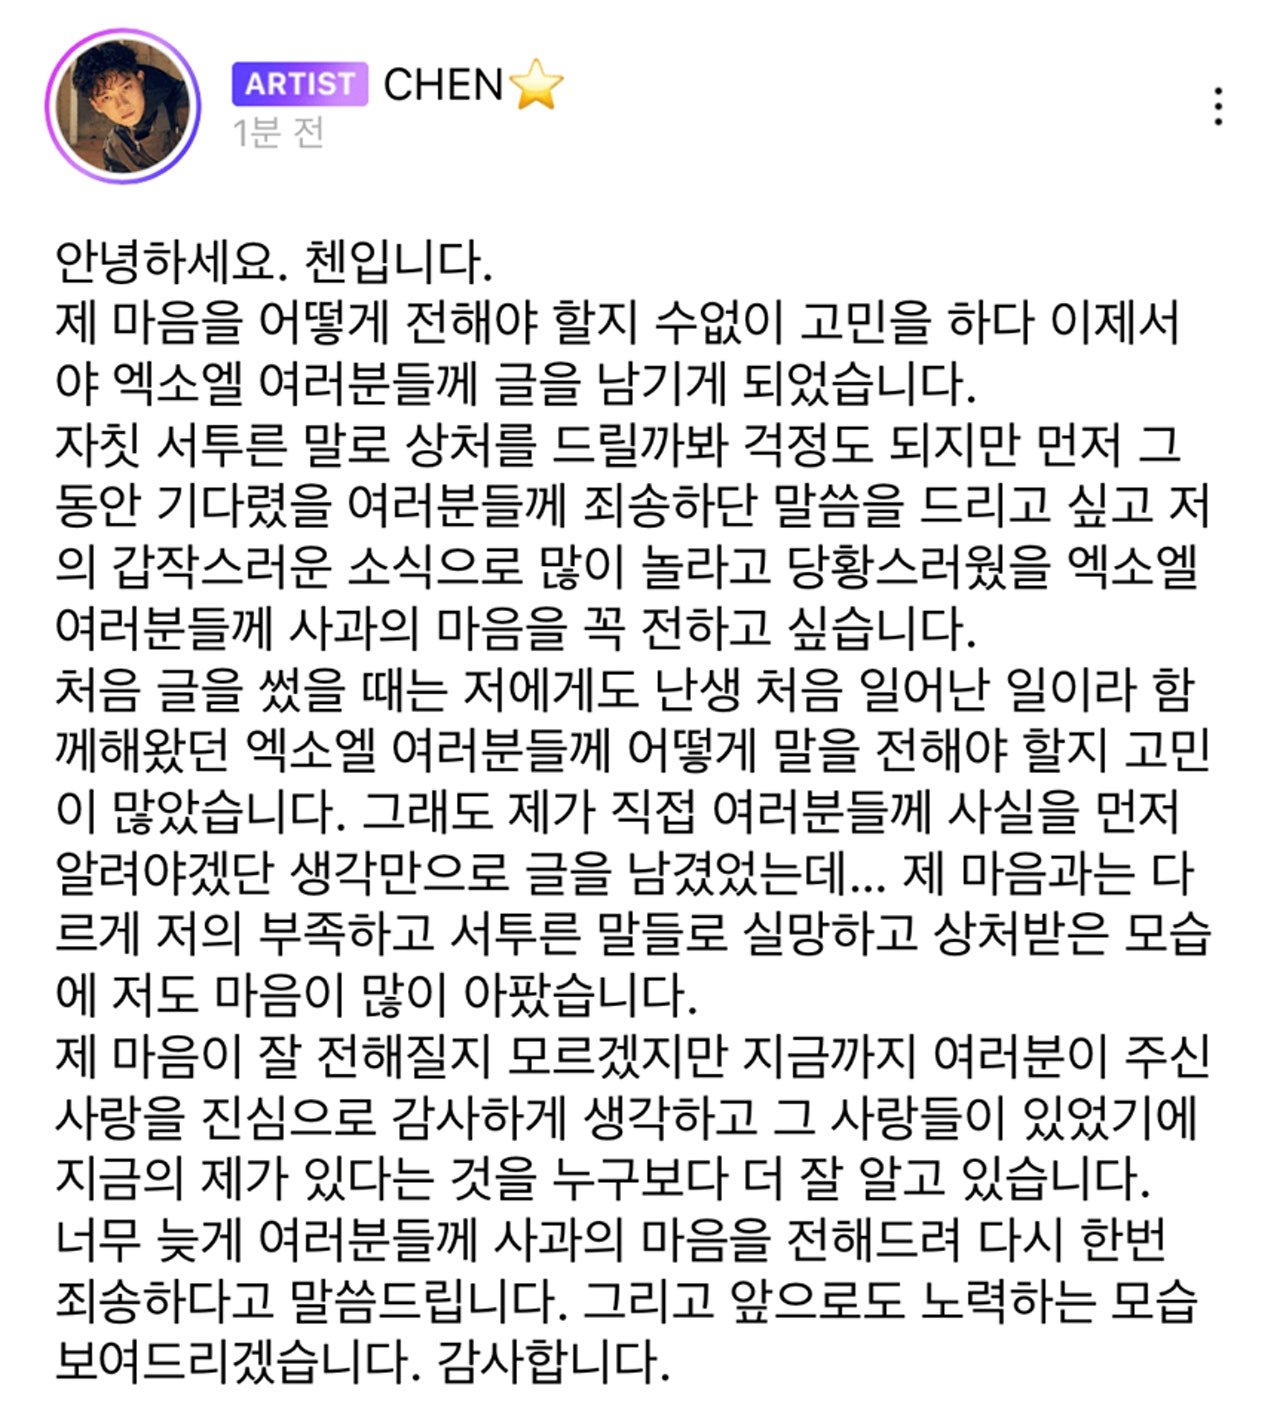 Chen沉默许久后，昨晚向EXO-L致歉。